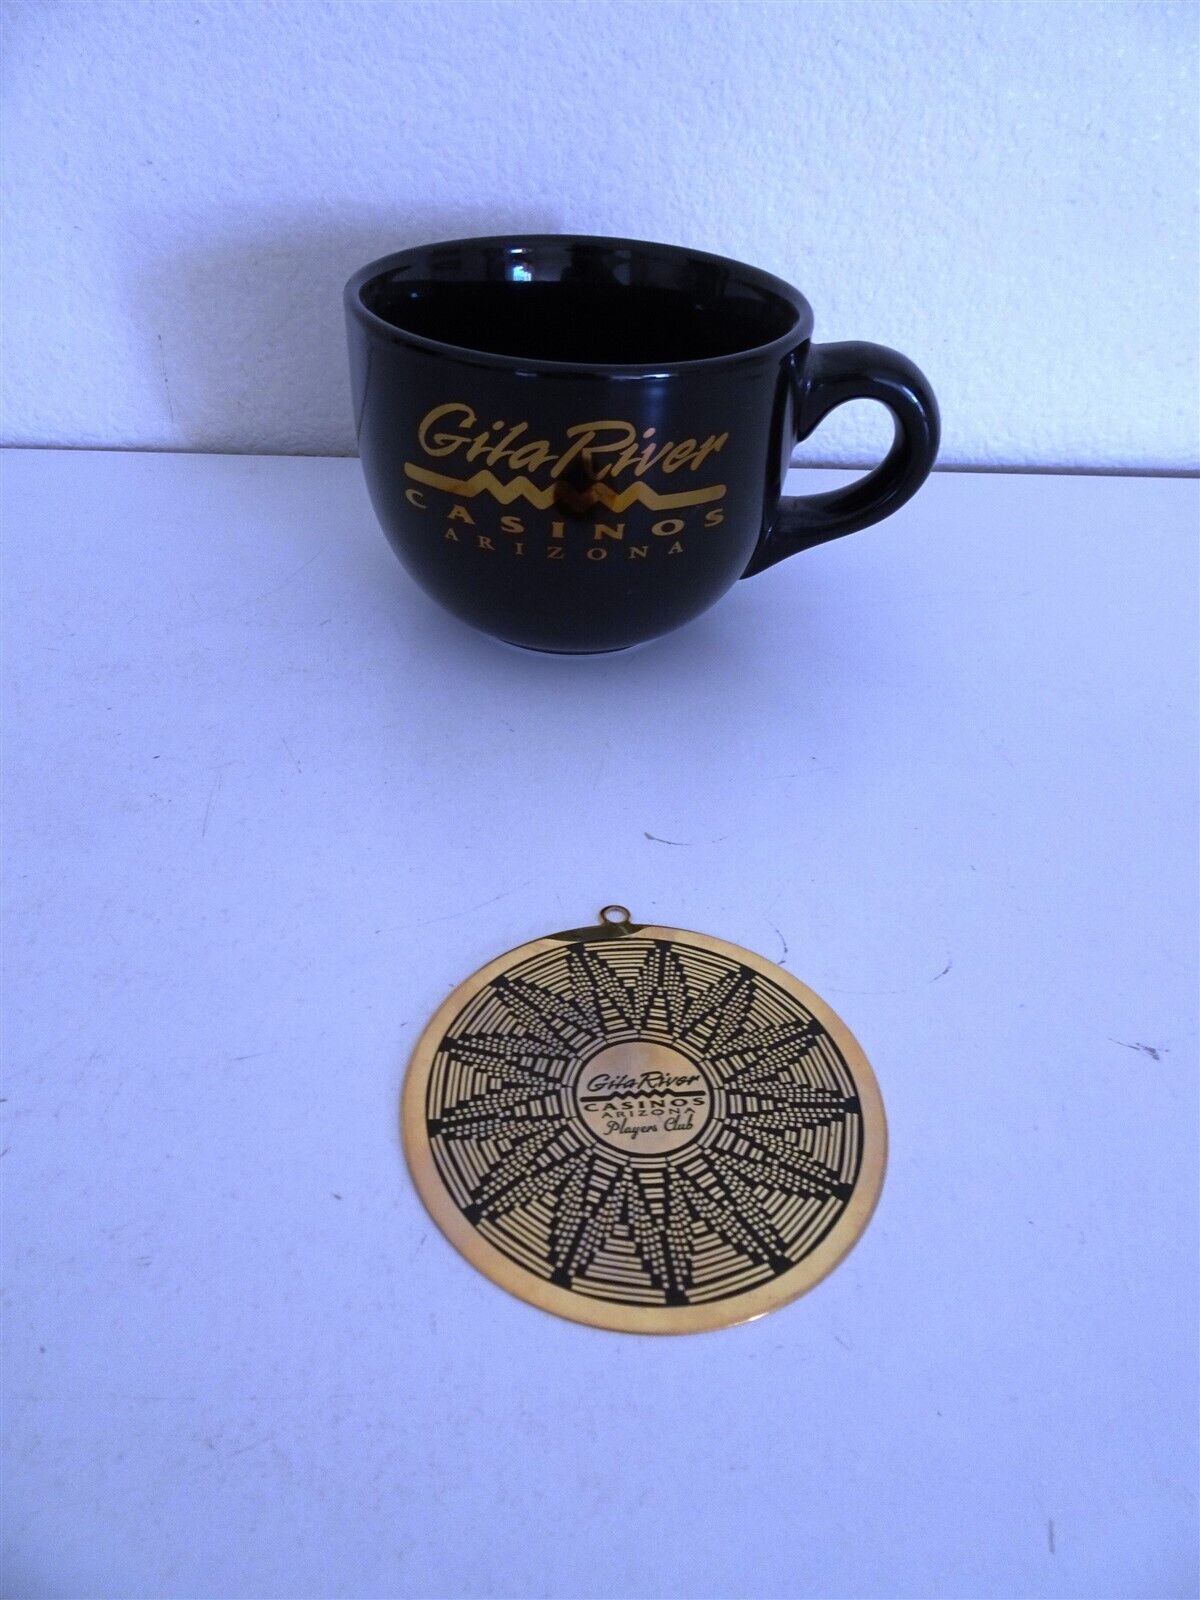 Gila River Casinos Arizona Players Club Large Black Ceramic Mug Gold Ornament